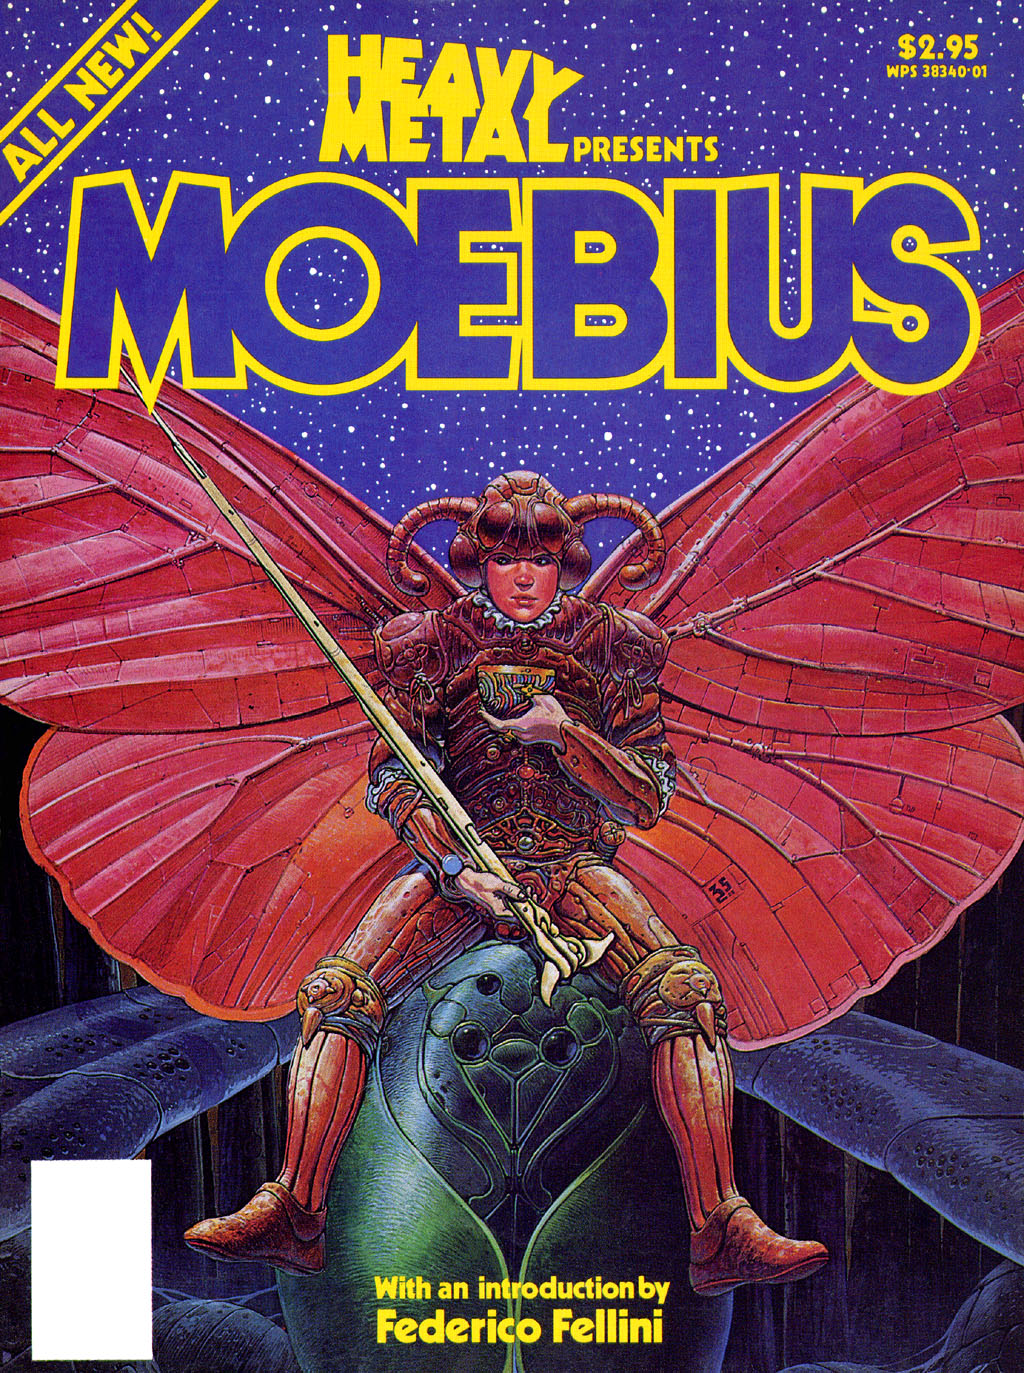 Heavy Metal Presents Moebius Full Page 1